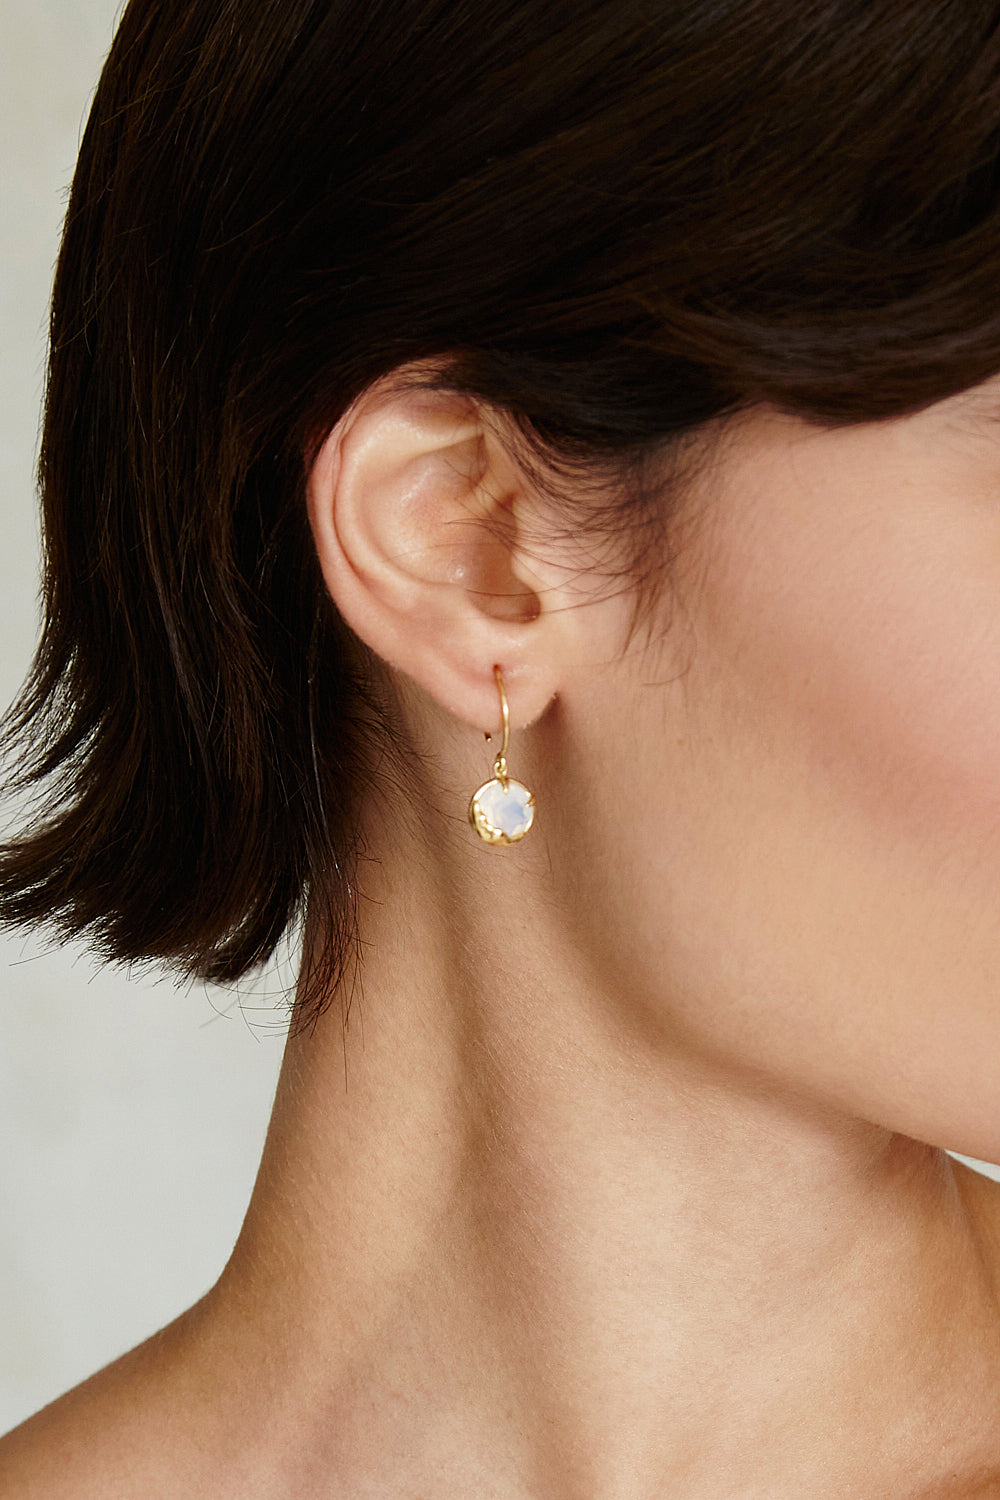 Chan Luu Gold Framed Dangle Earrings in White Opal Crystal and Gold Vermeil